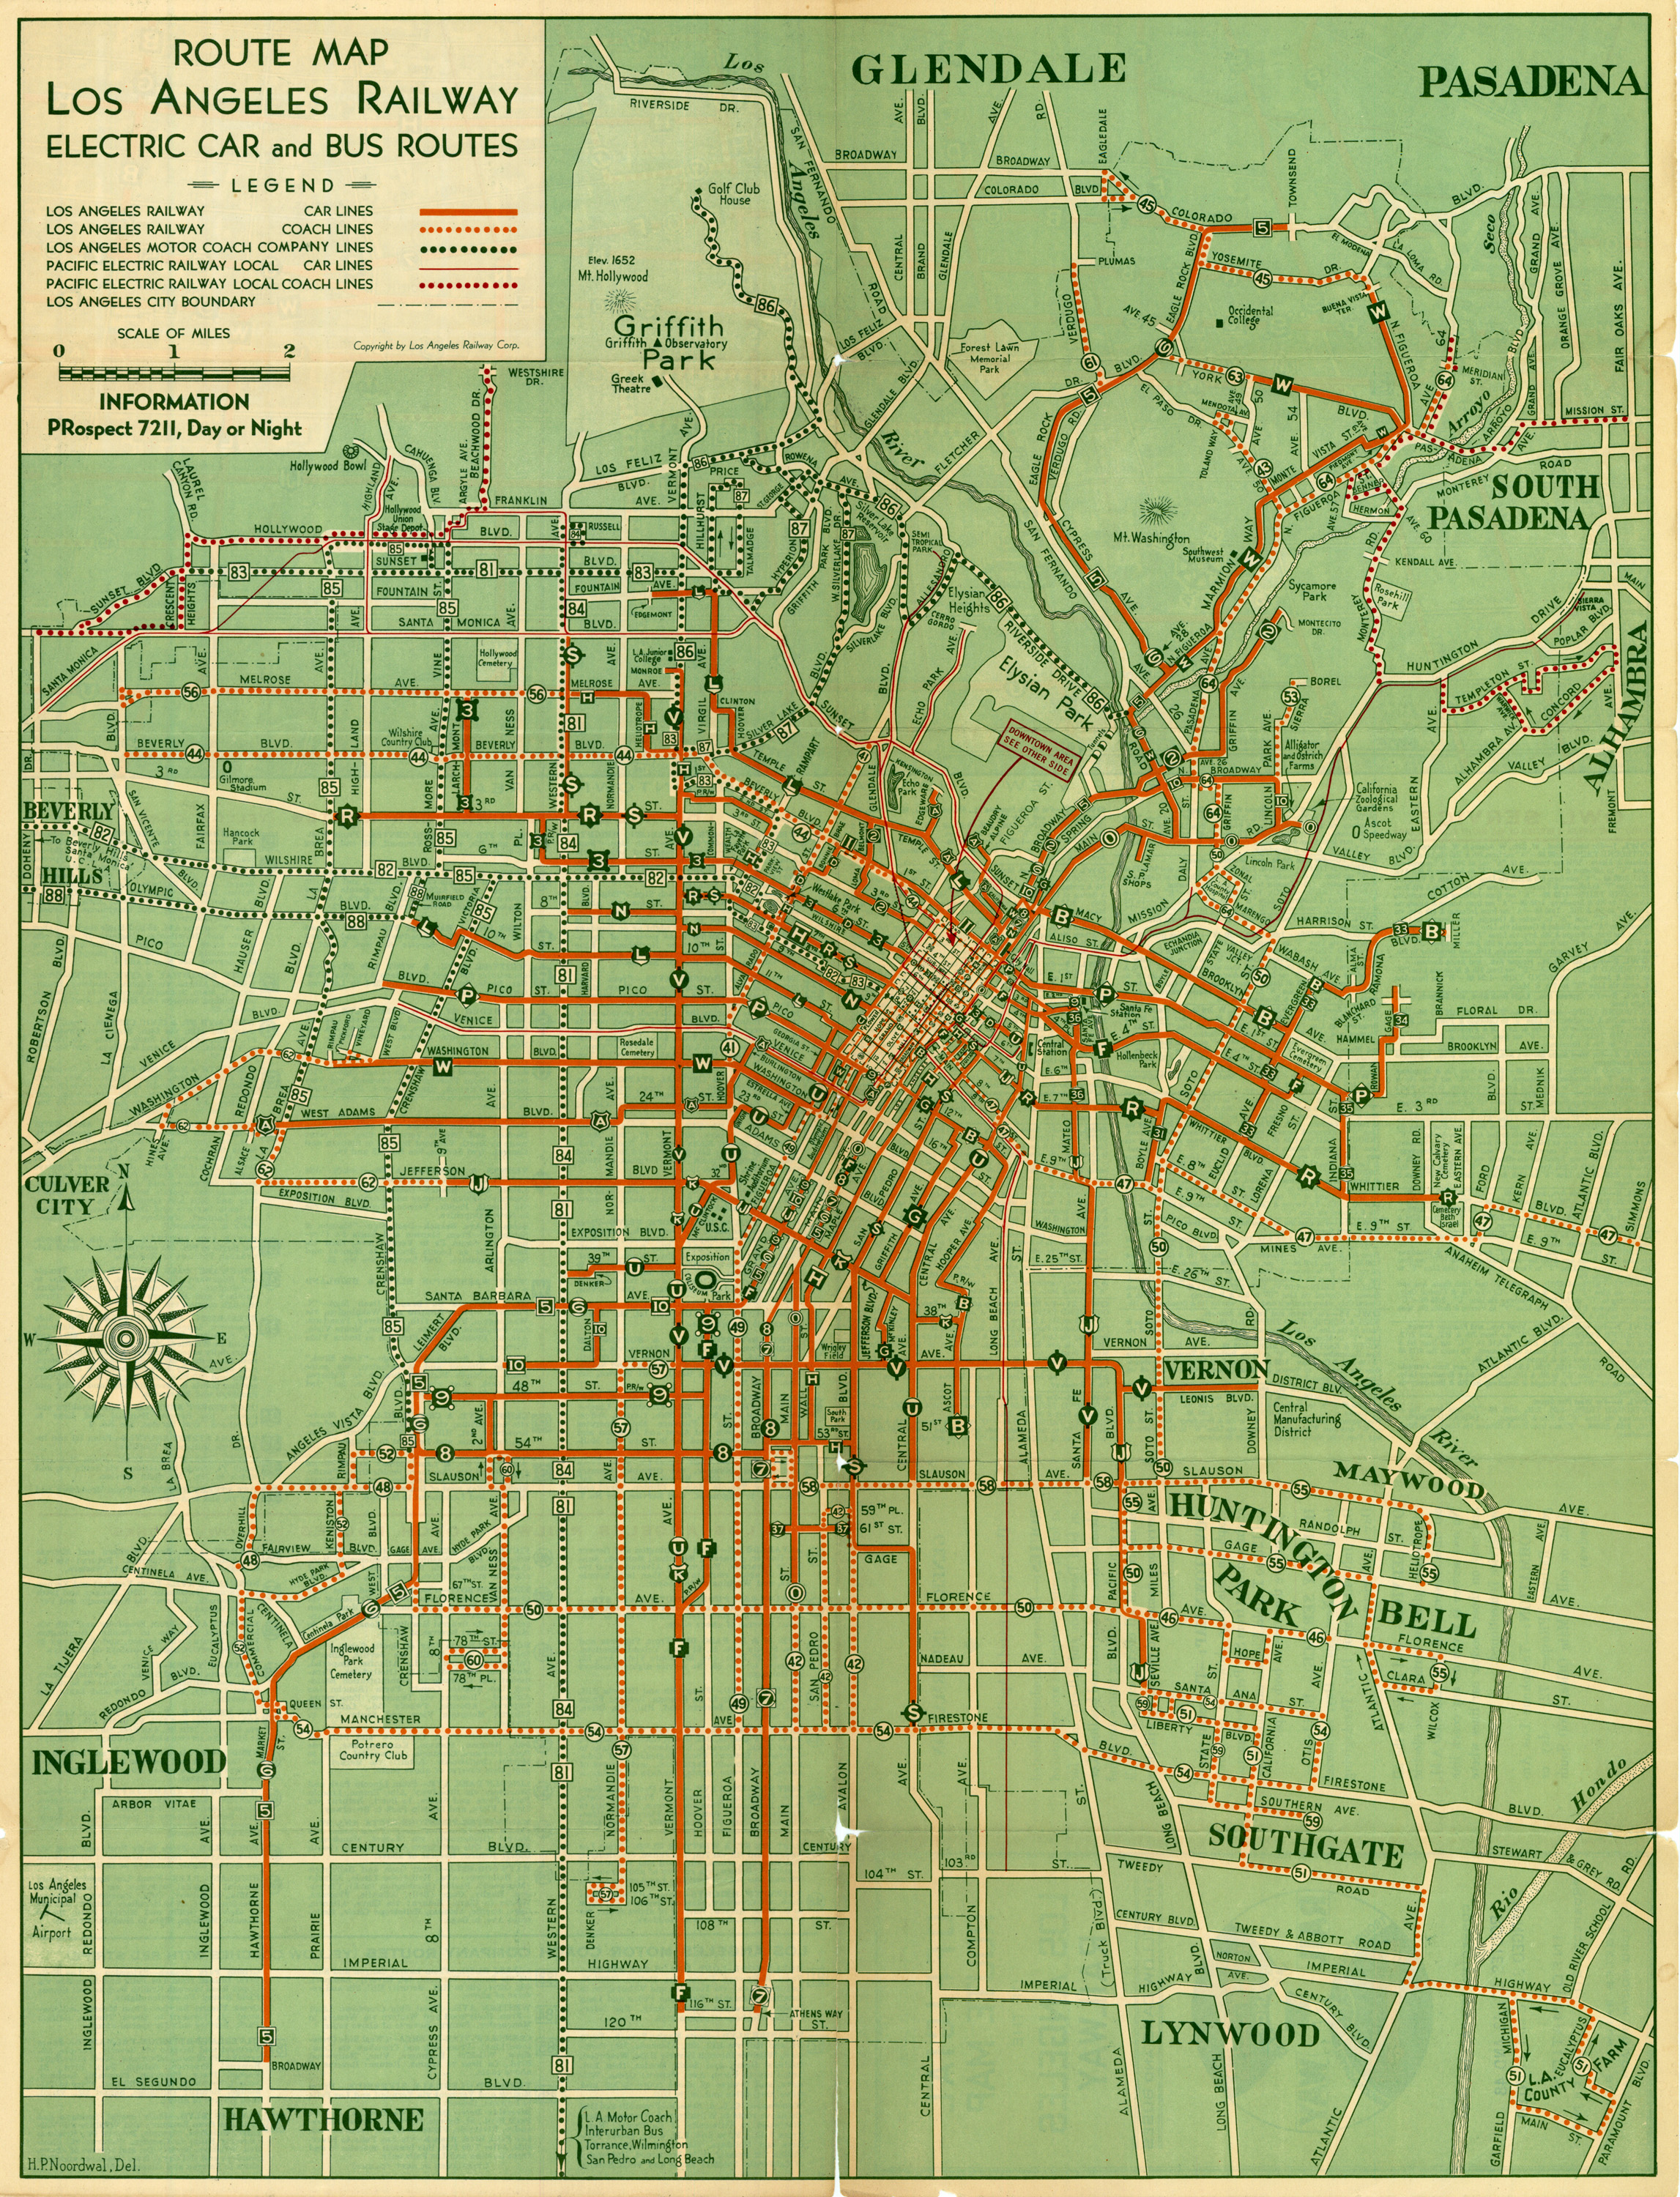 Los Angeles Railway map (1938)